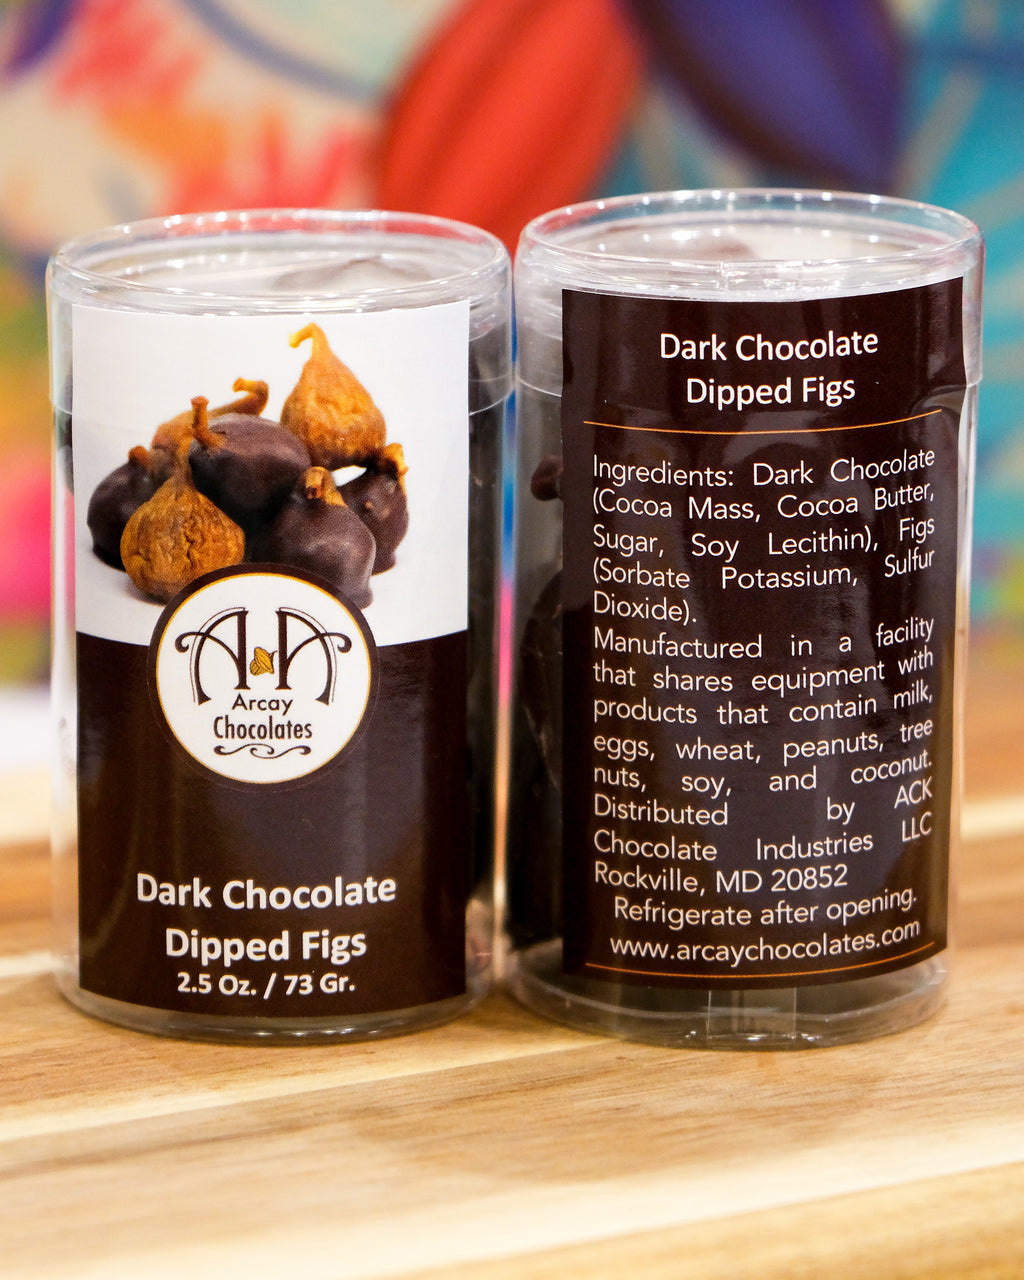 Dark chocolate covered figs made by Arcay Chocolates.